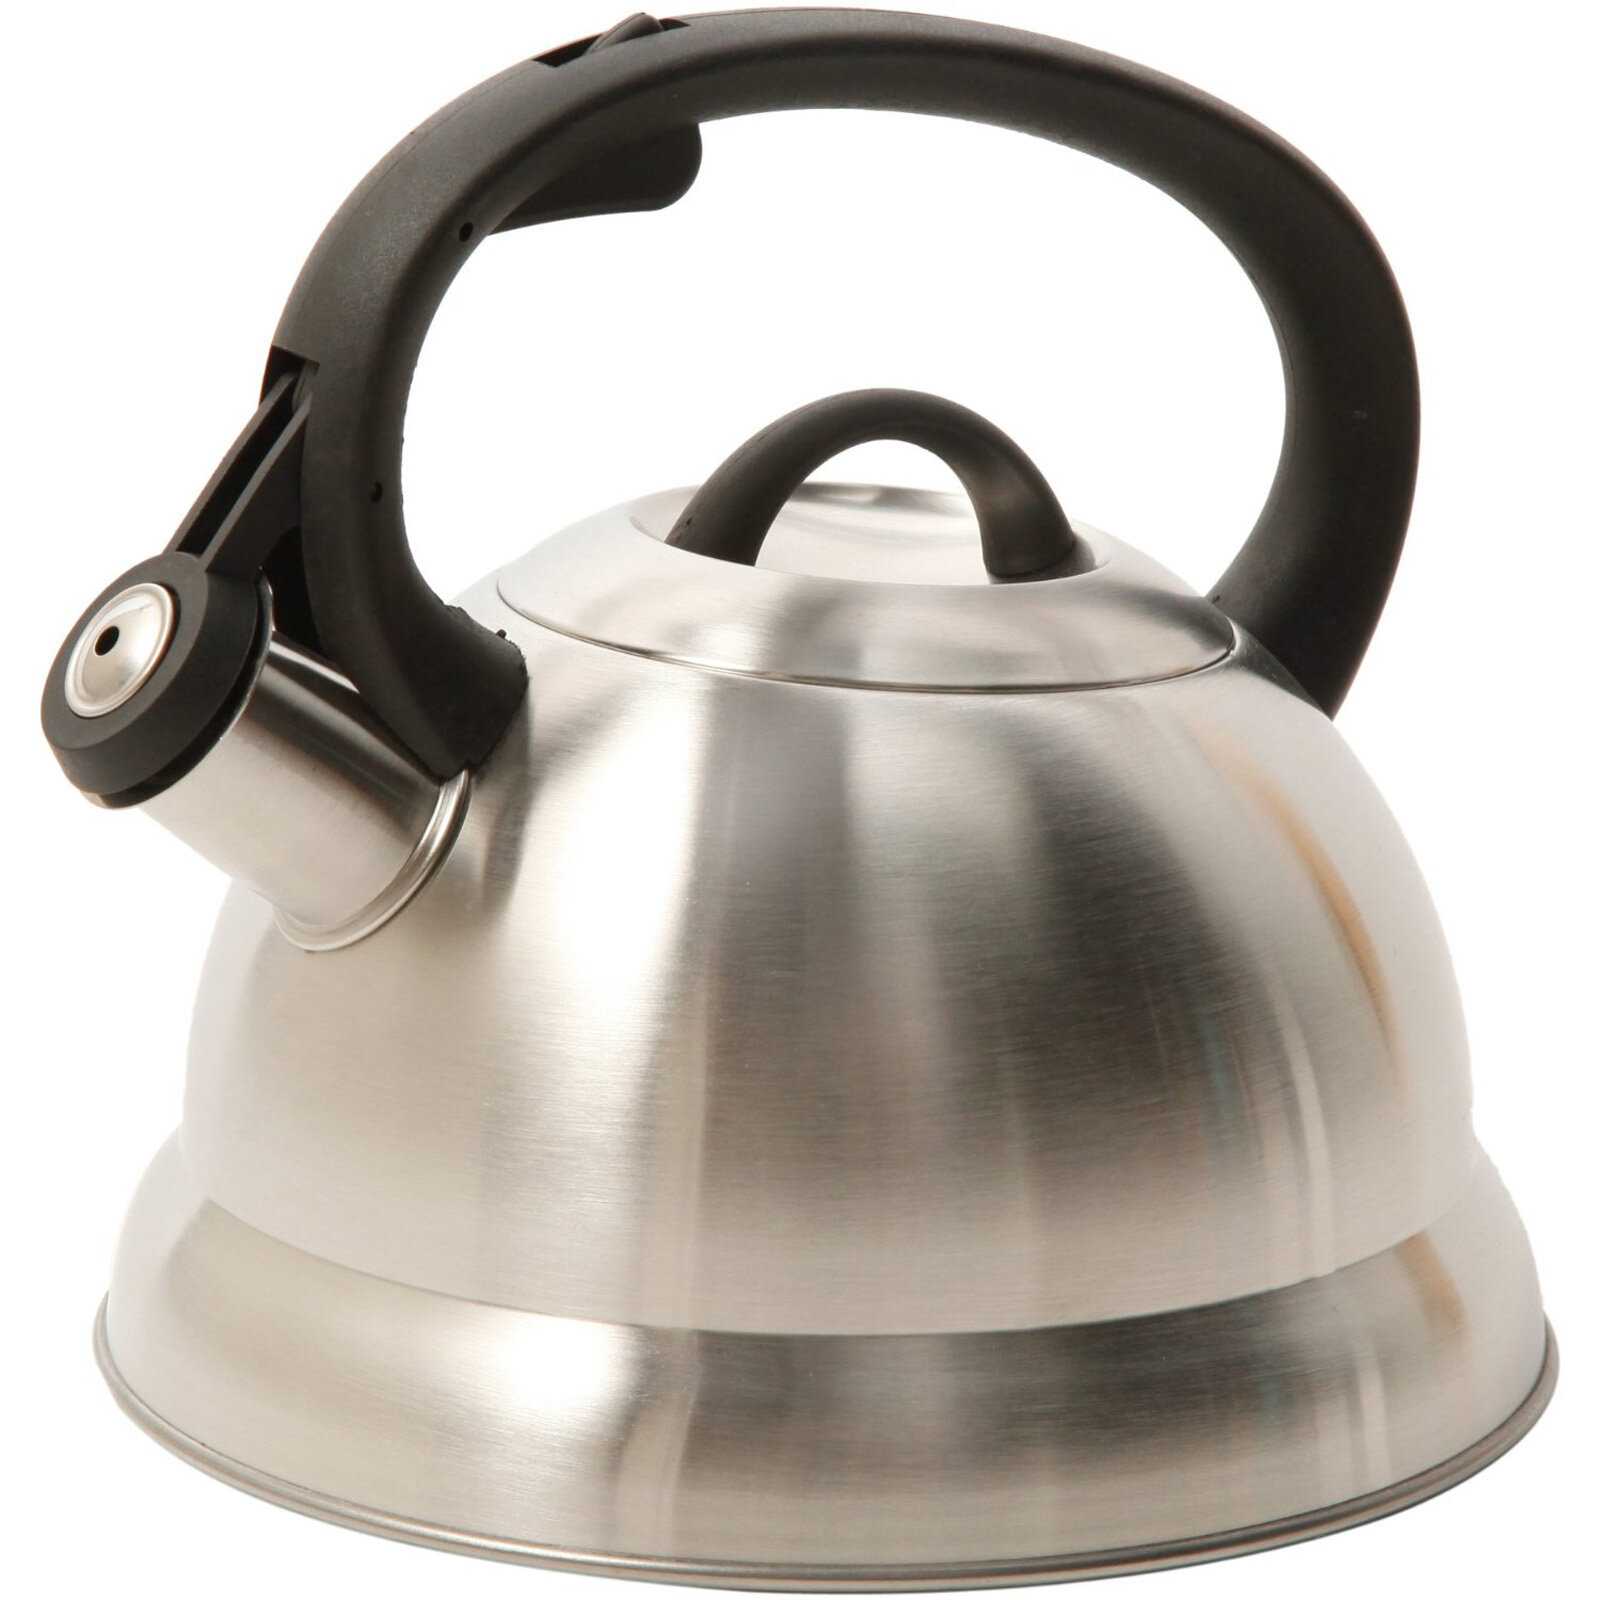 3L Whistling Tea Kettle Thick Stainless Steel Teakettle Teapot